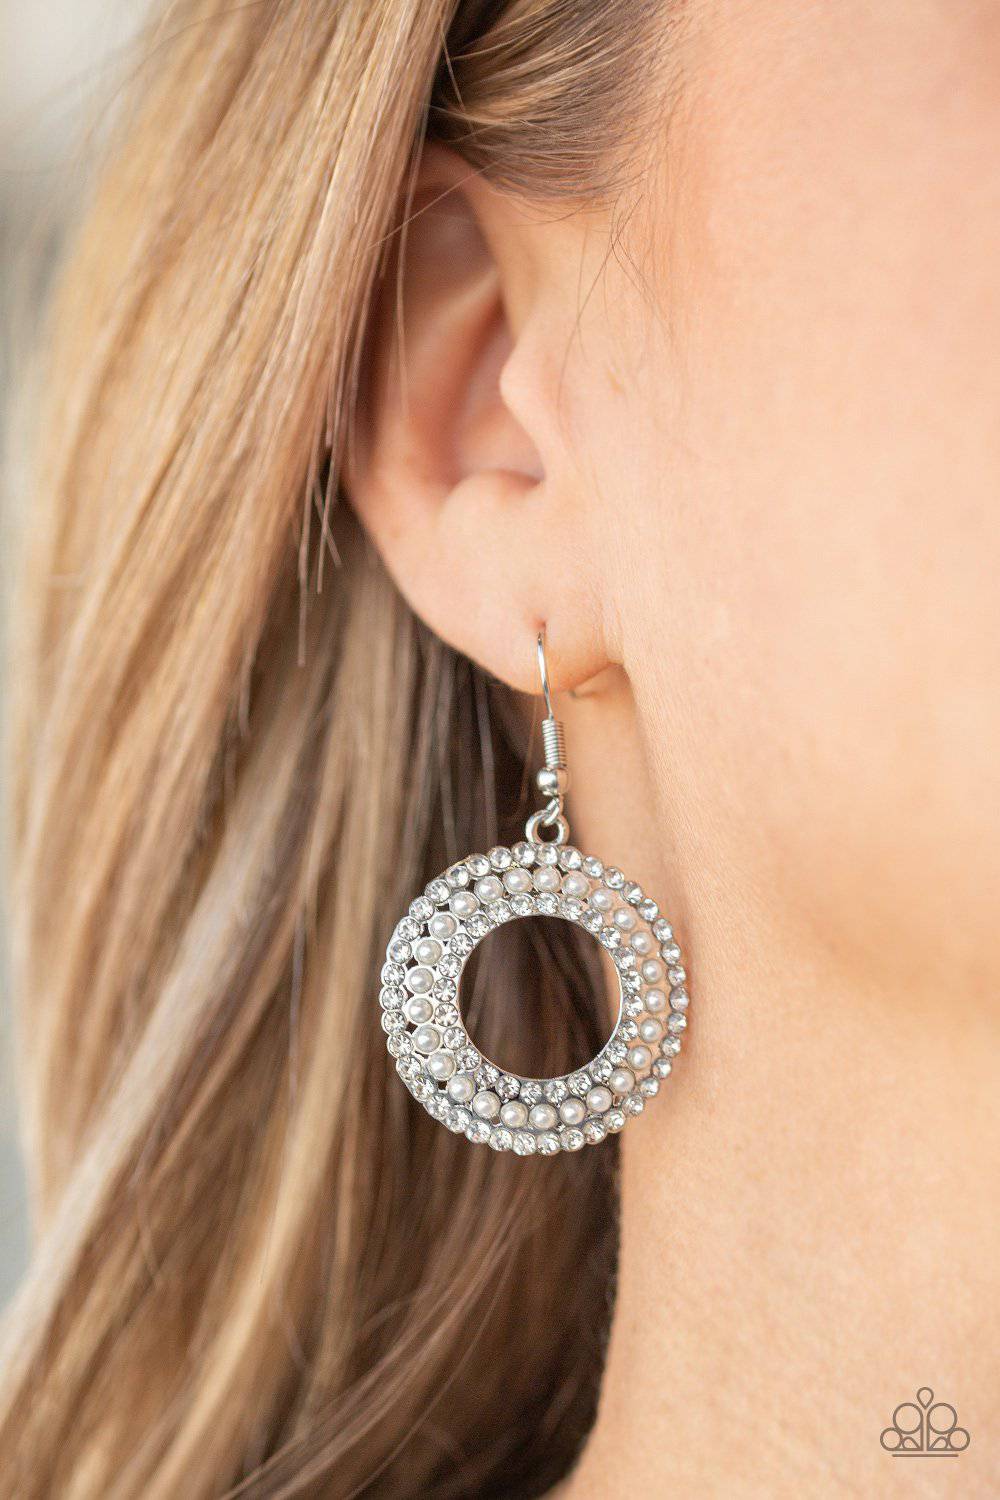 Sparkle Splurge - White Pearl and Rhinestone Earrings - Paparazzi Accessories - GlaMarous Titi Jewels